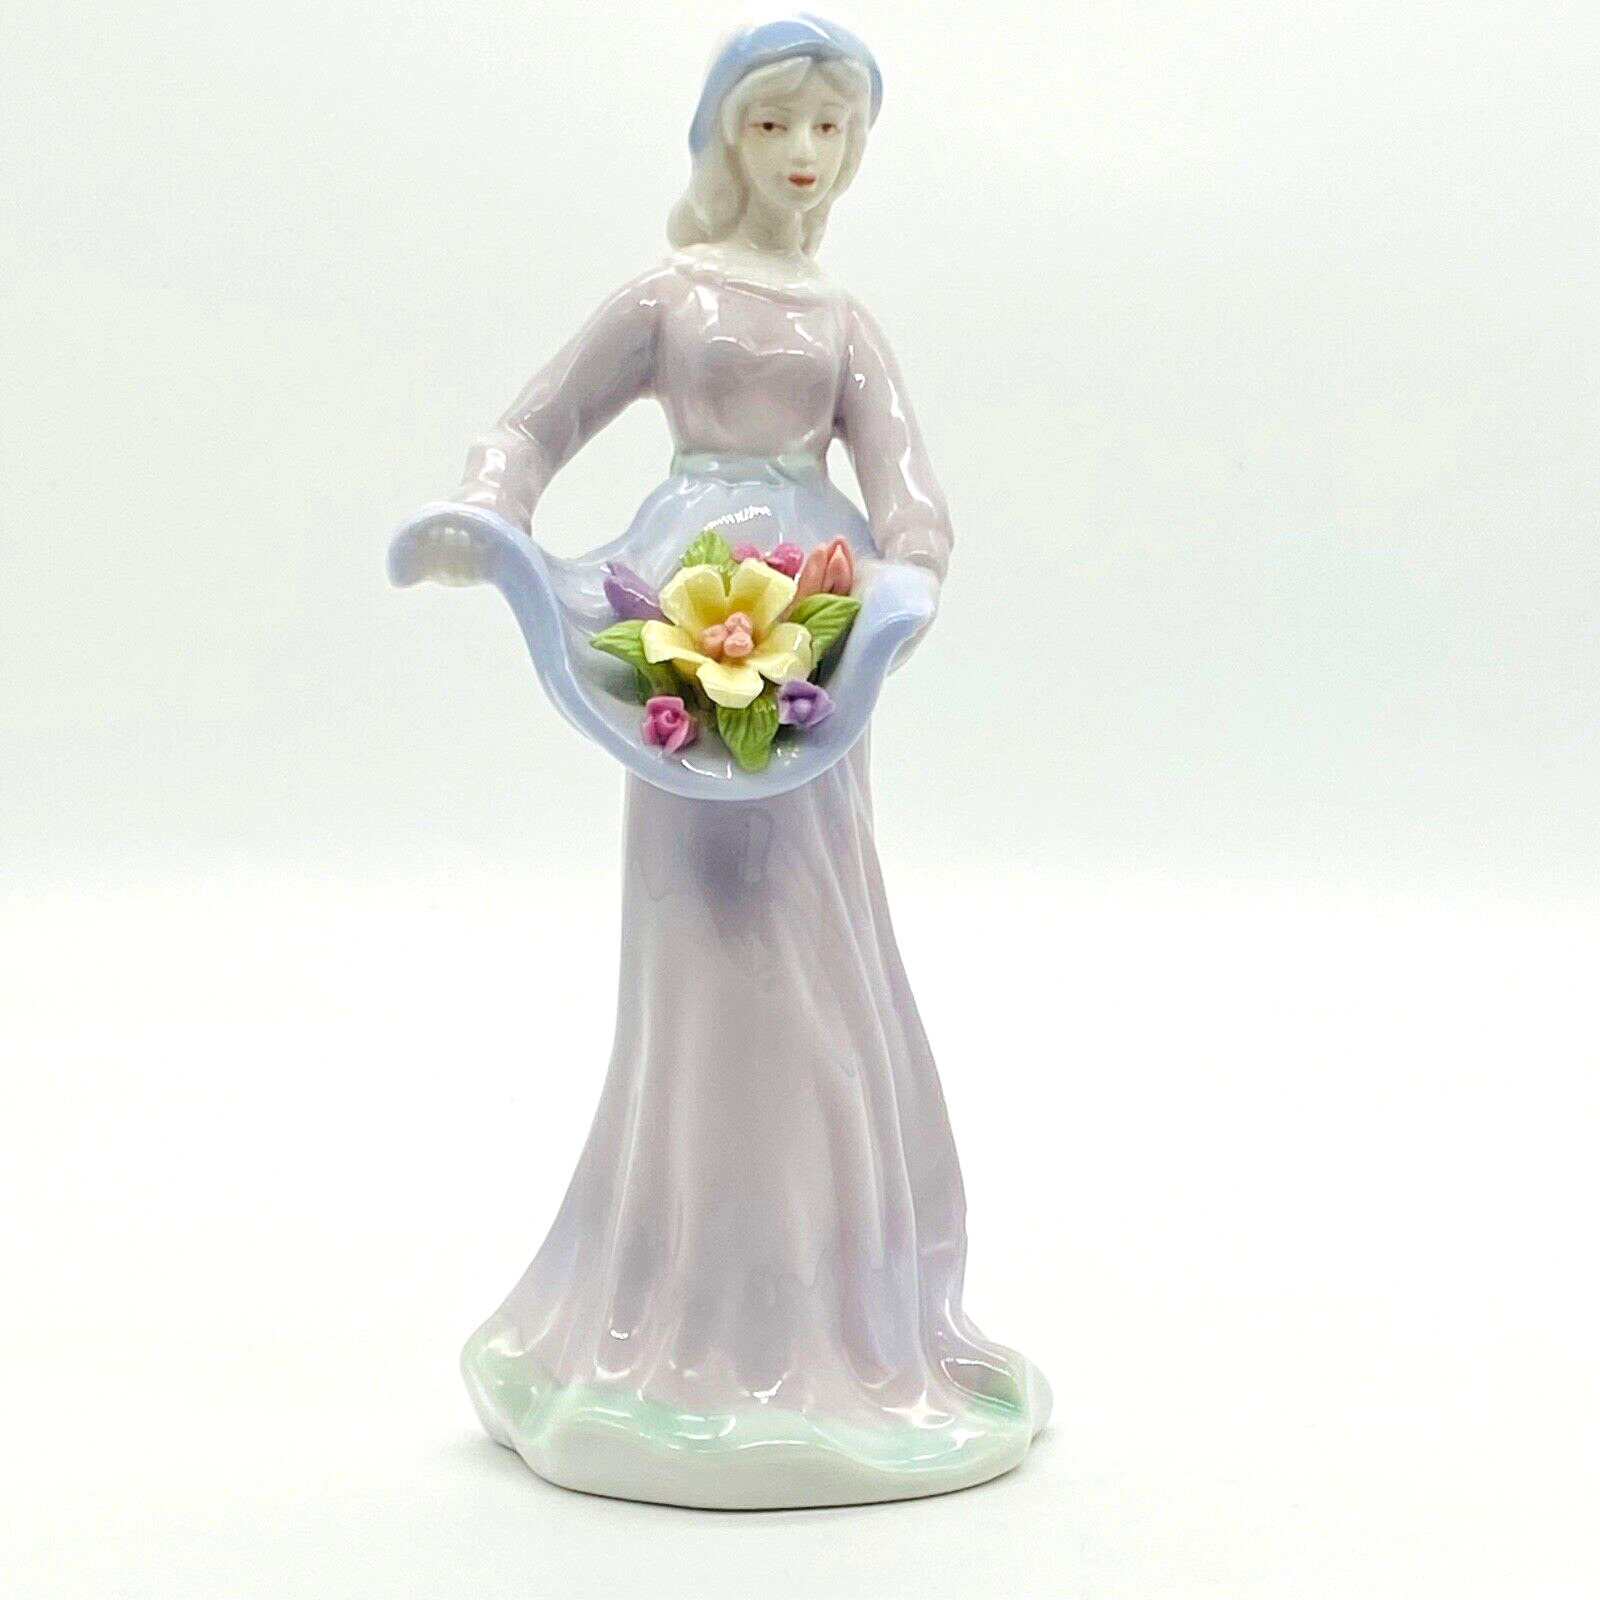 Porcelain Lady Figurine Holding Flowers in Apron Sculpture Women Glazed Statue